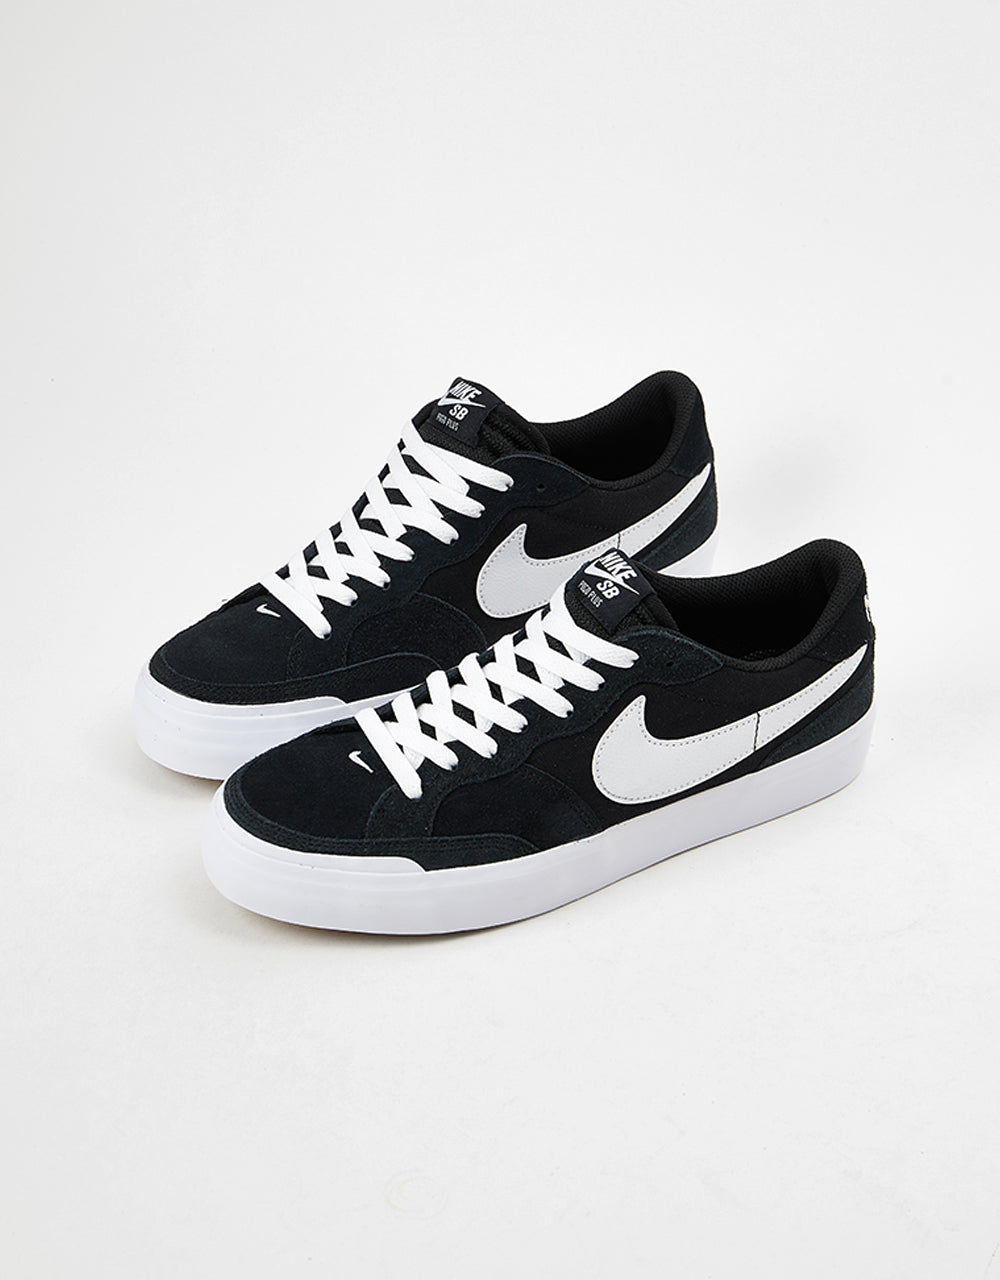 Nike SB Zoom Pogo Plus Skate Shoes - Black/White-Black-White-Gum Lt Brown